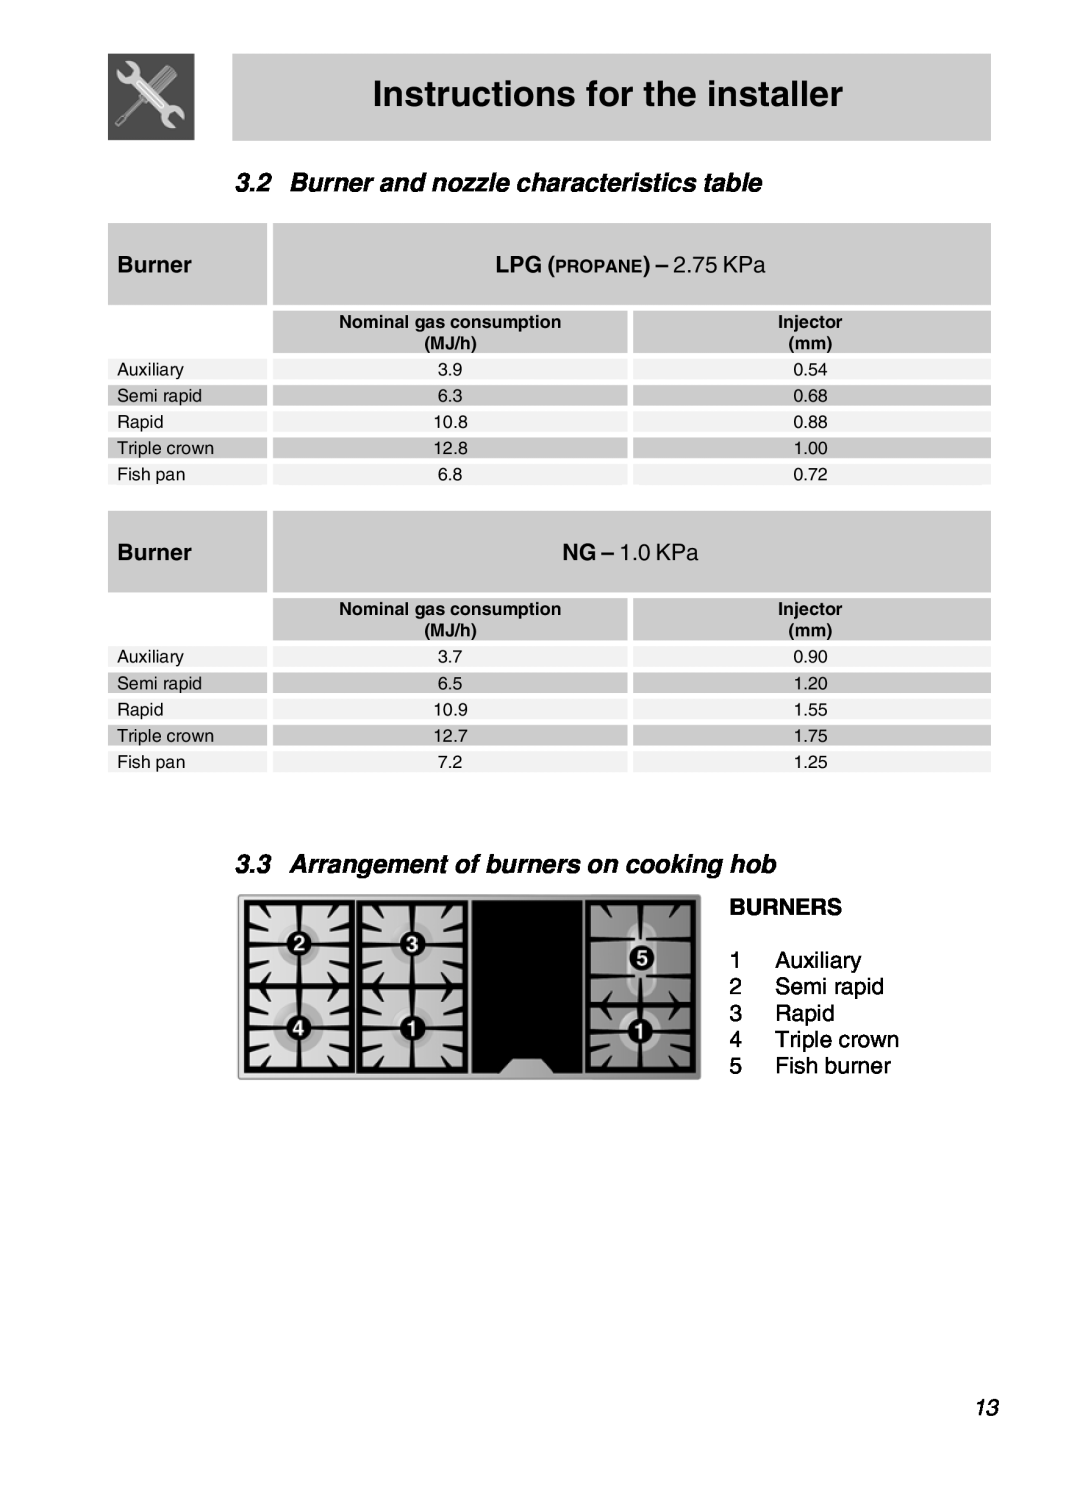 Smeg A3SX Burner and nozzle characteristics table, 3.3Arrangement of burners on cooking hob, LPG PROPANE - 2.75 KPa, MJ/h 